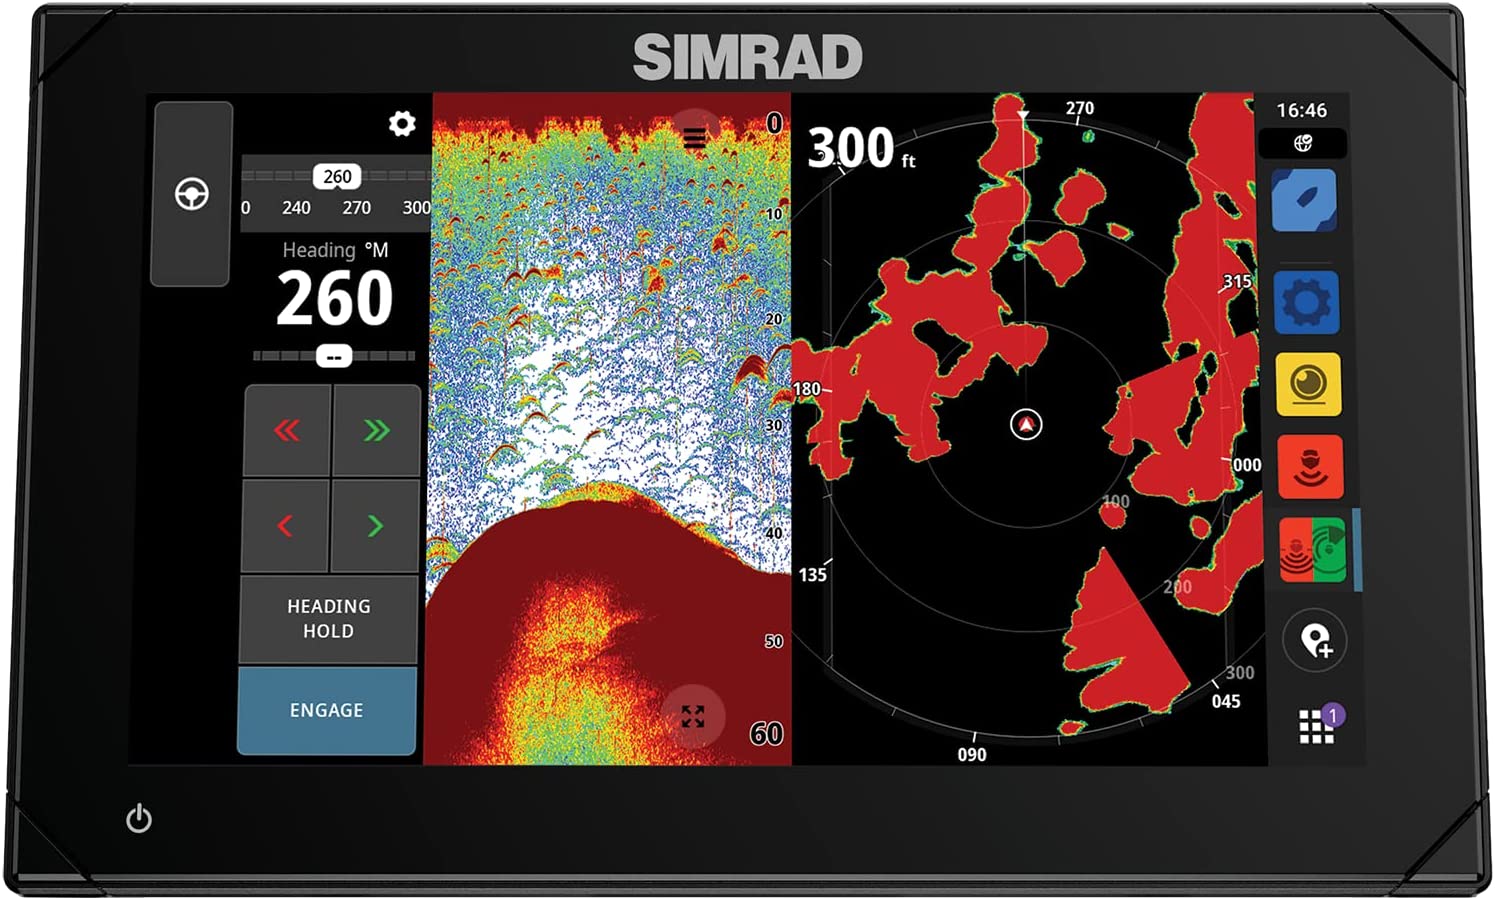 Simrad NSX series chartplotter and fishfinder. Photo by Simrad Yachting.